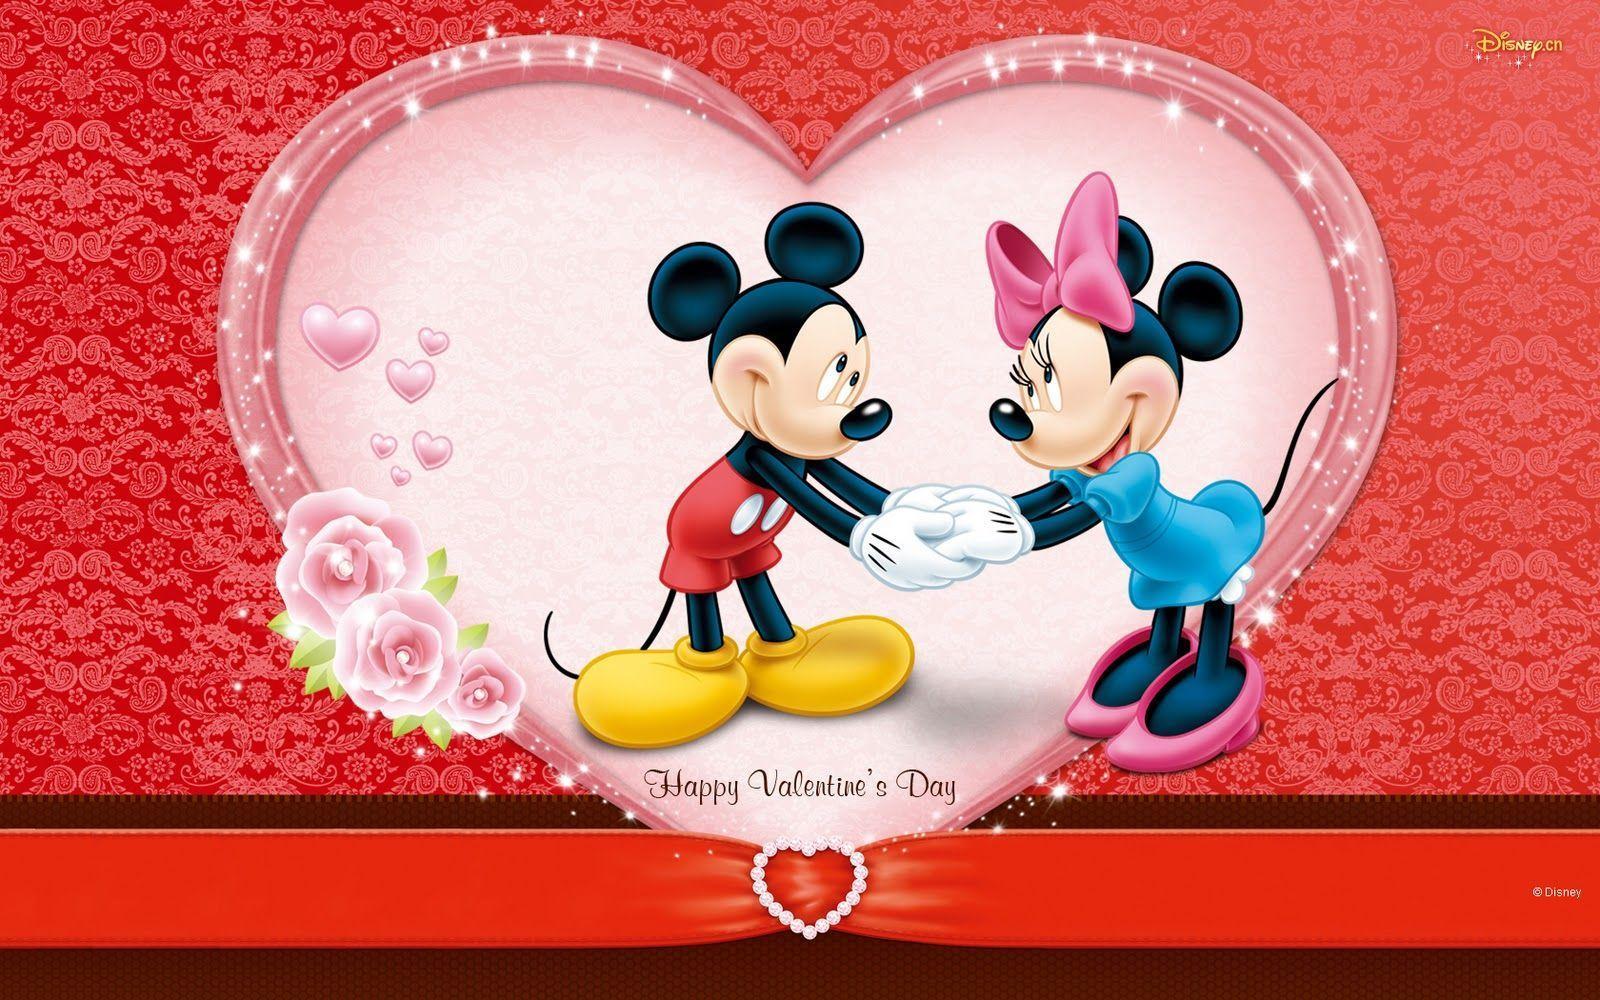 Valentines Day 2014 at Disneyland HD Wallpaper